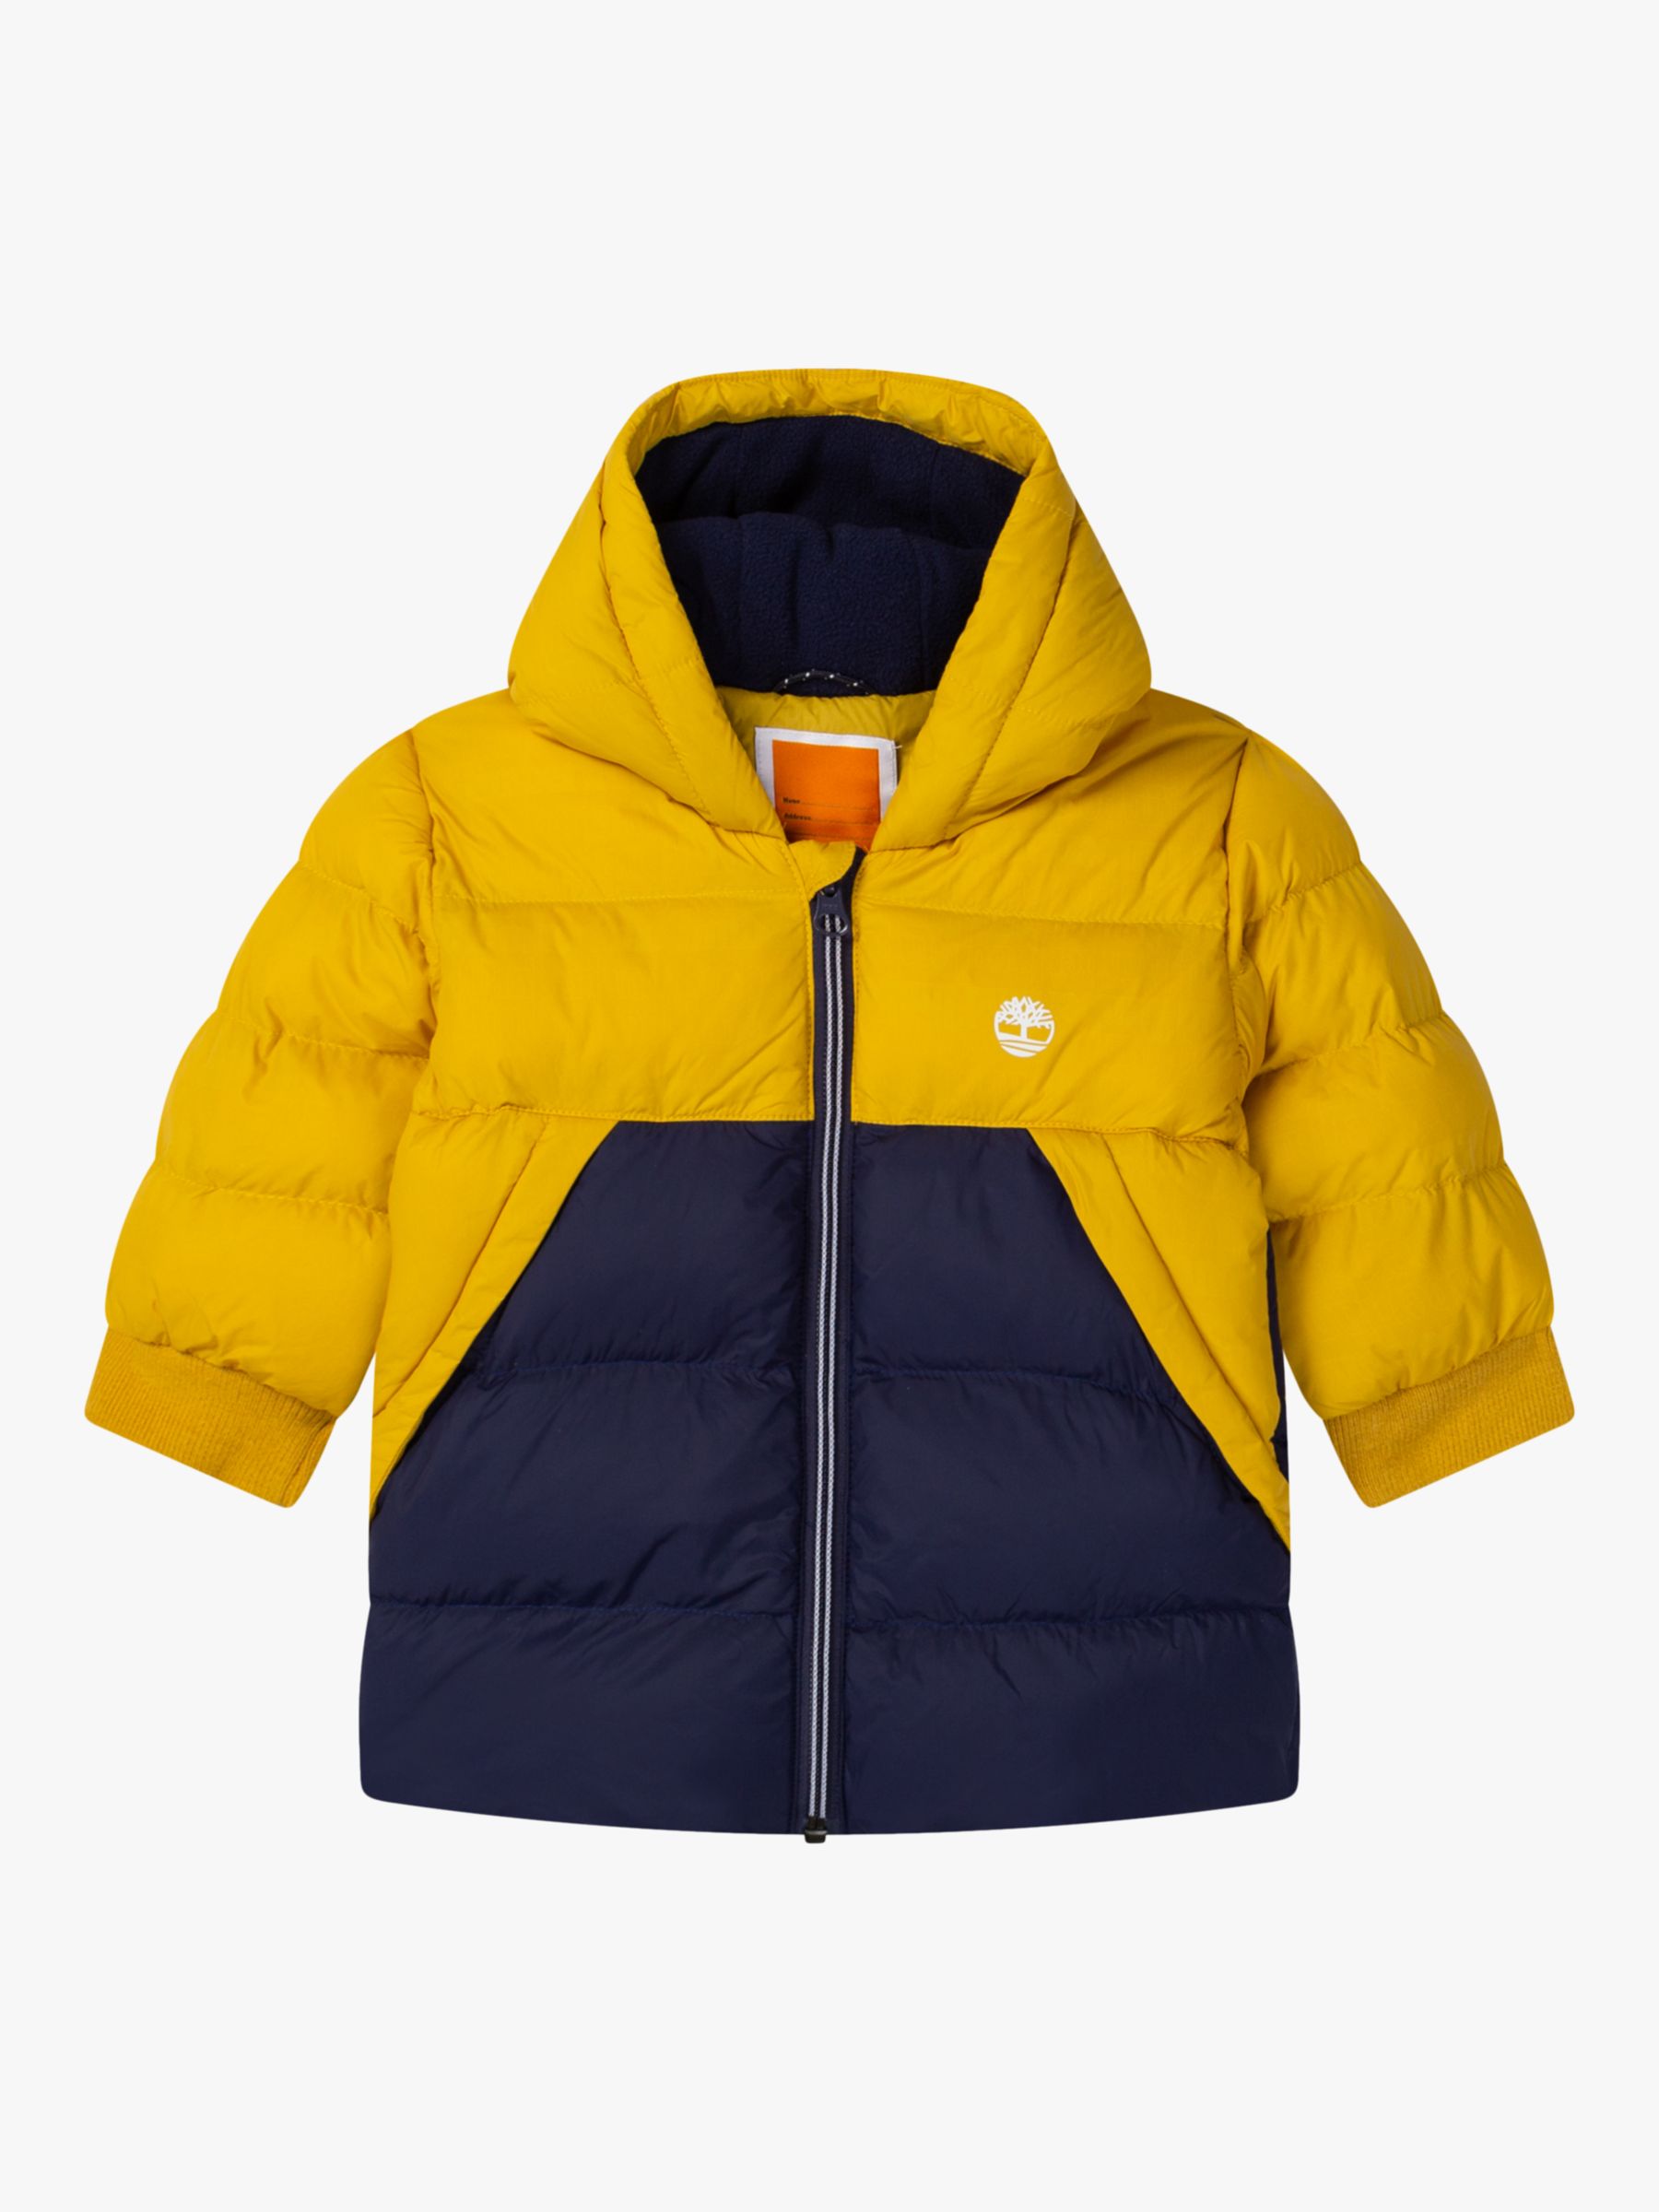 Timberland Baby Colourblock Jacket, Gold/Navy, 6